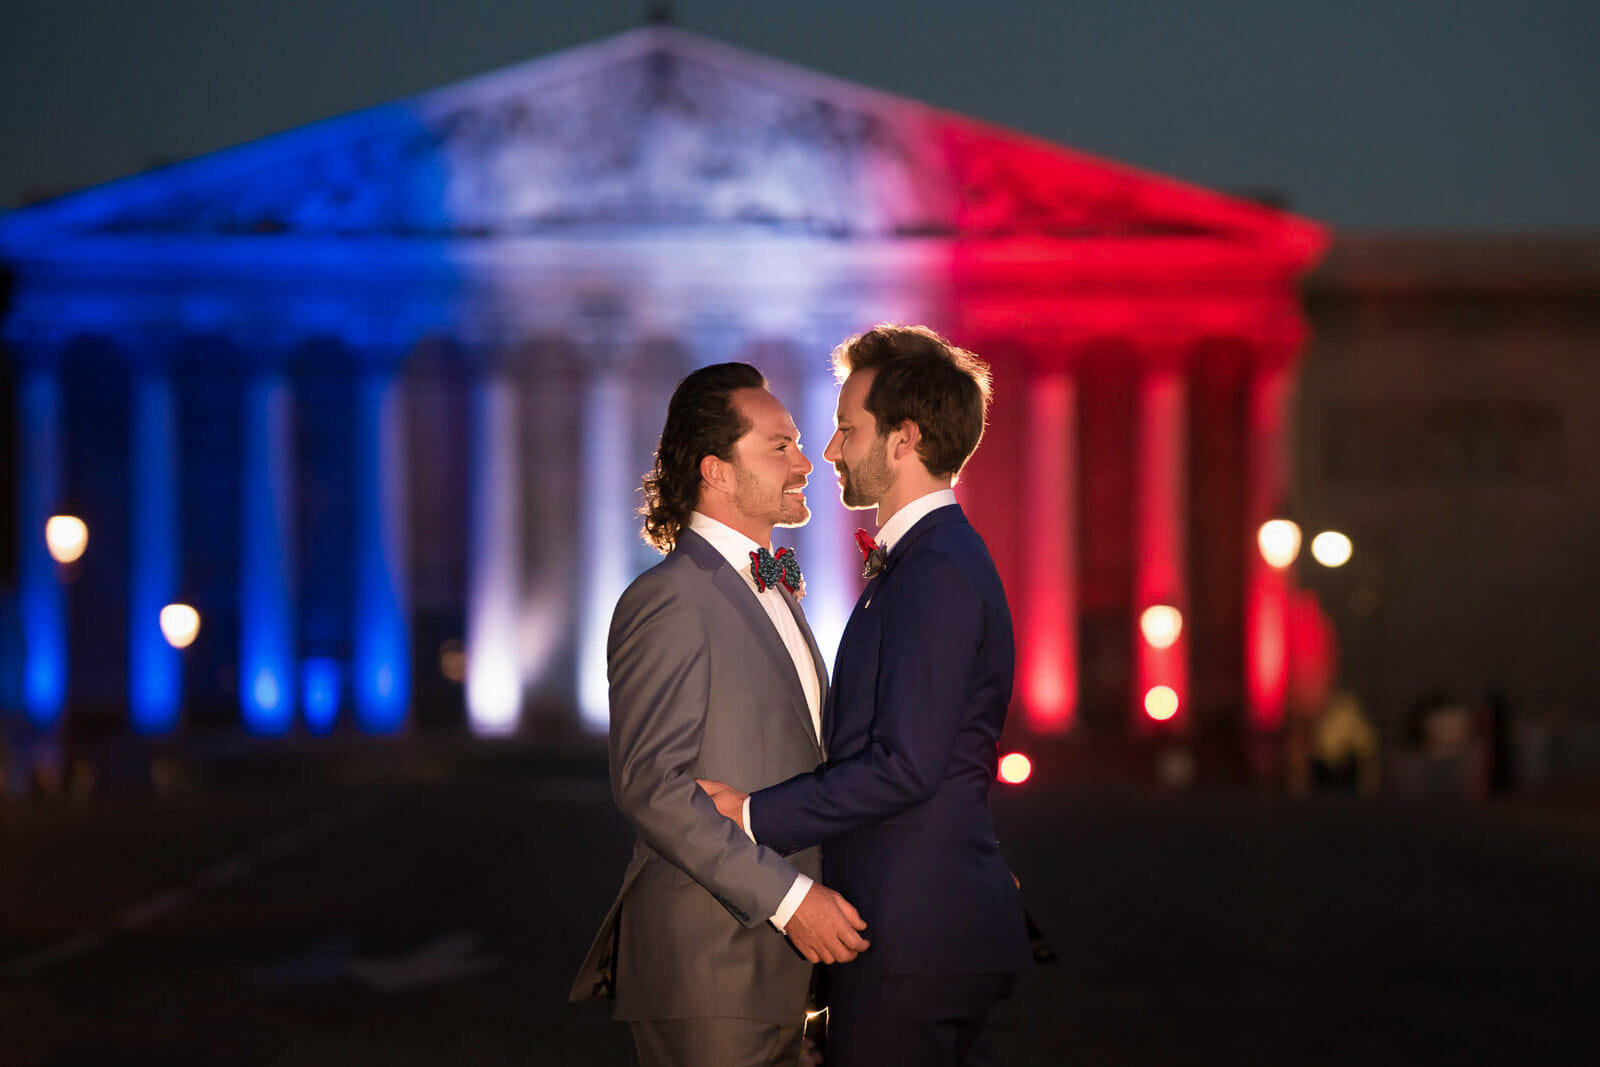 Romantic gay couple photoshoot in Paris at night